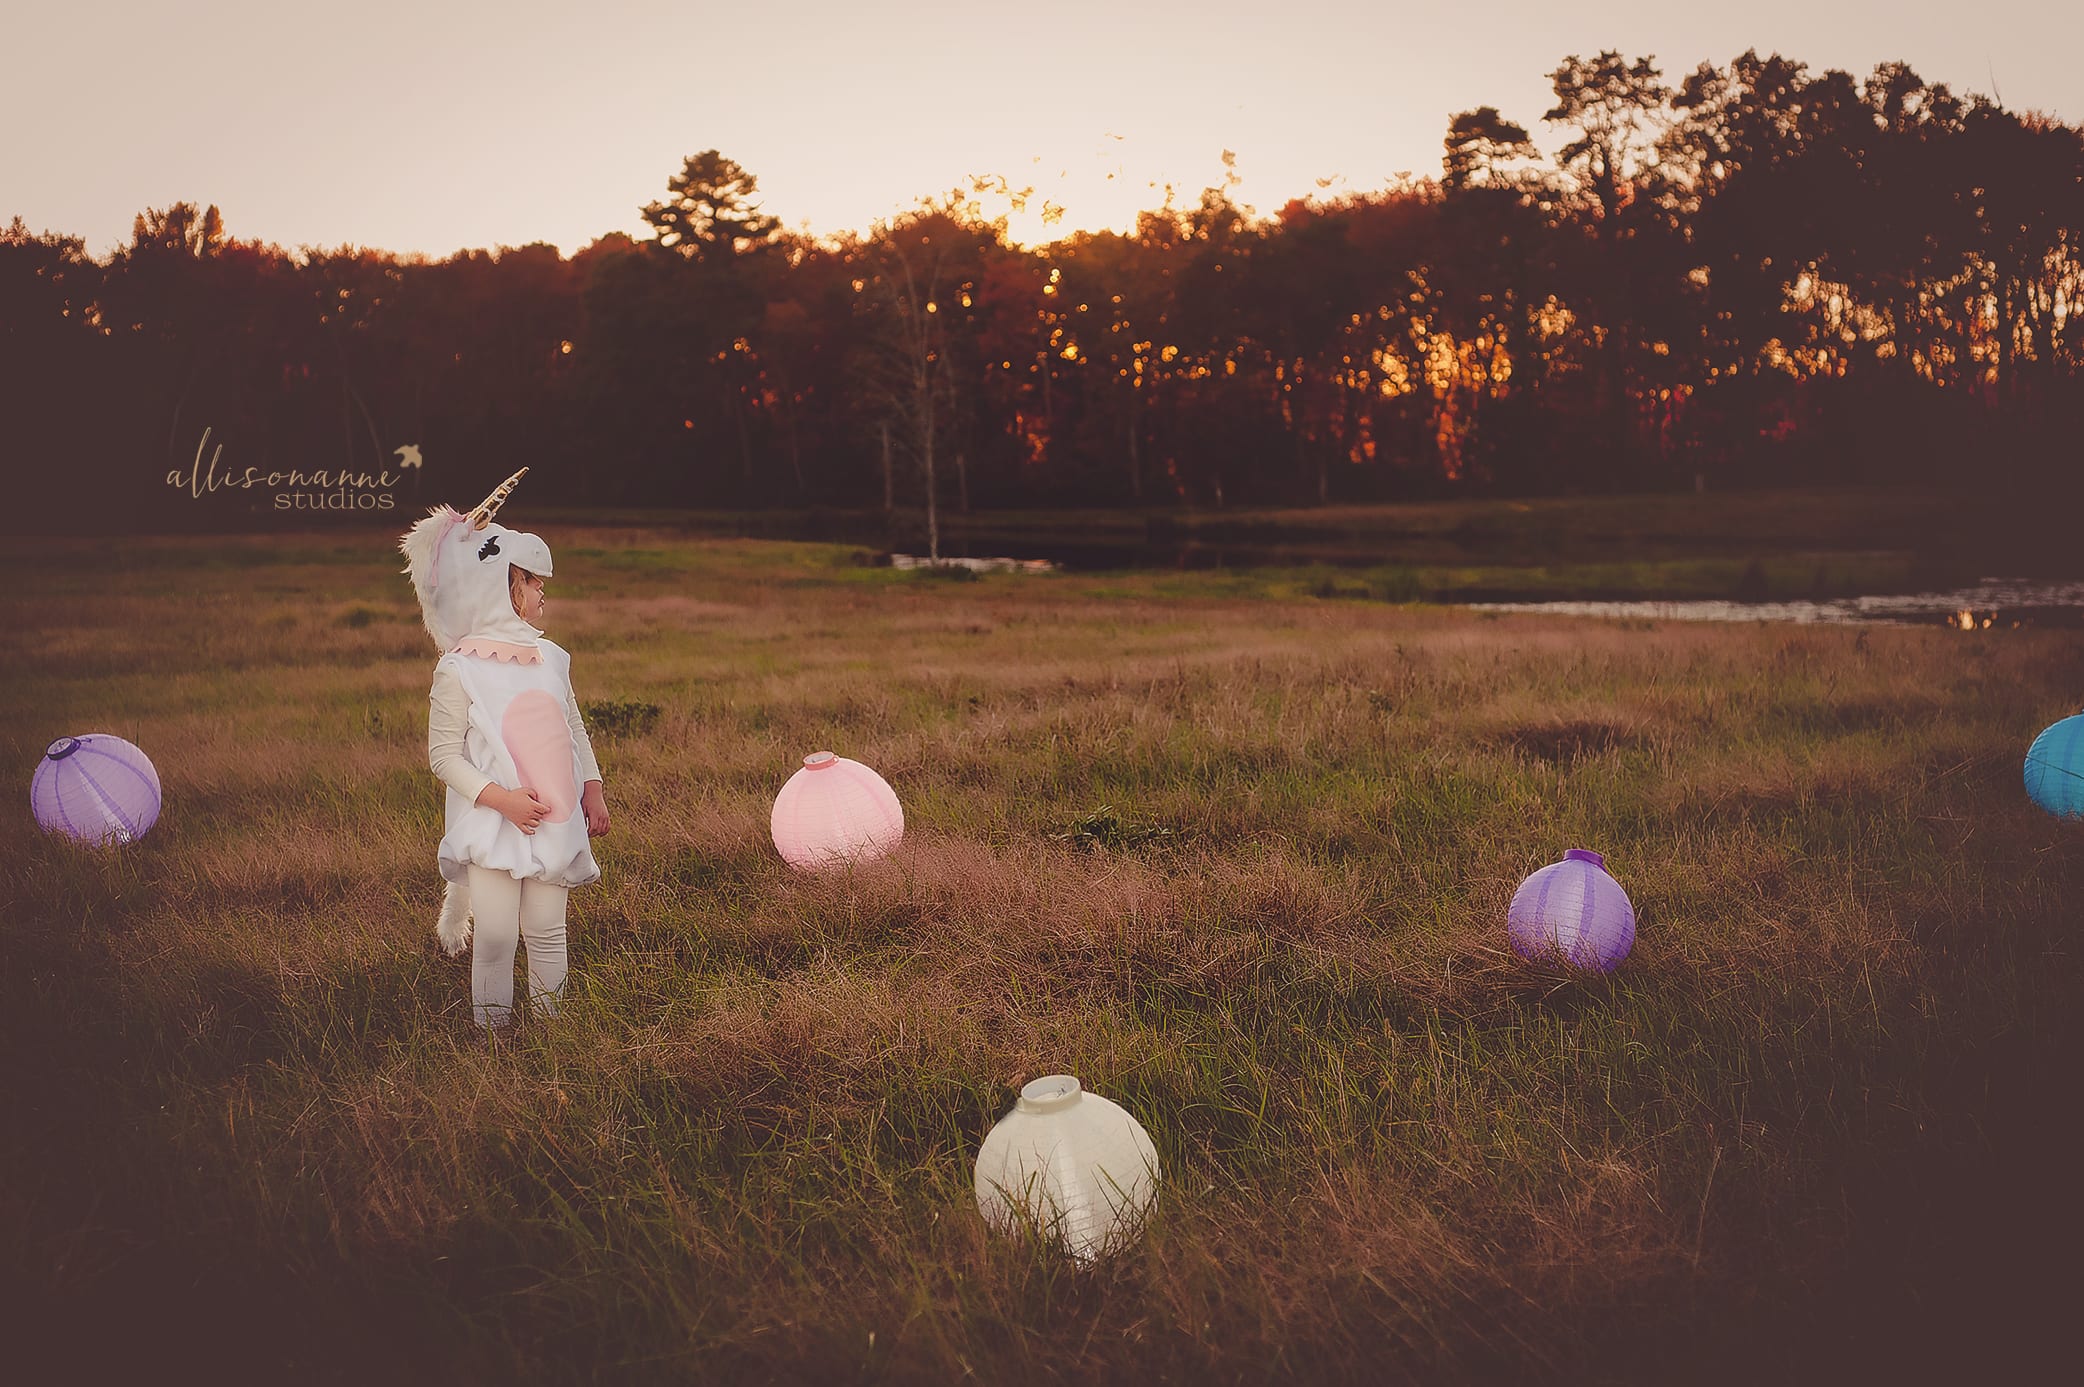 Unicorn, Pottery Barn Kids, Costume, Halloween 2015, Lanterns, Magical Beast, AllisonAnne Studios, Best photographer South Jersey, Trick or Treat, Hammoton